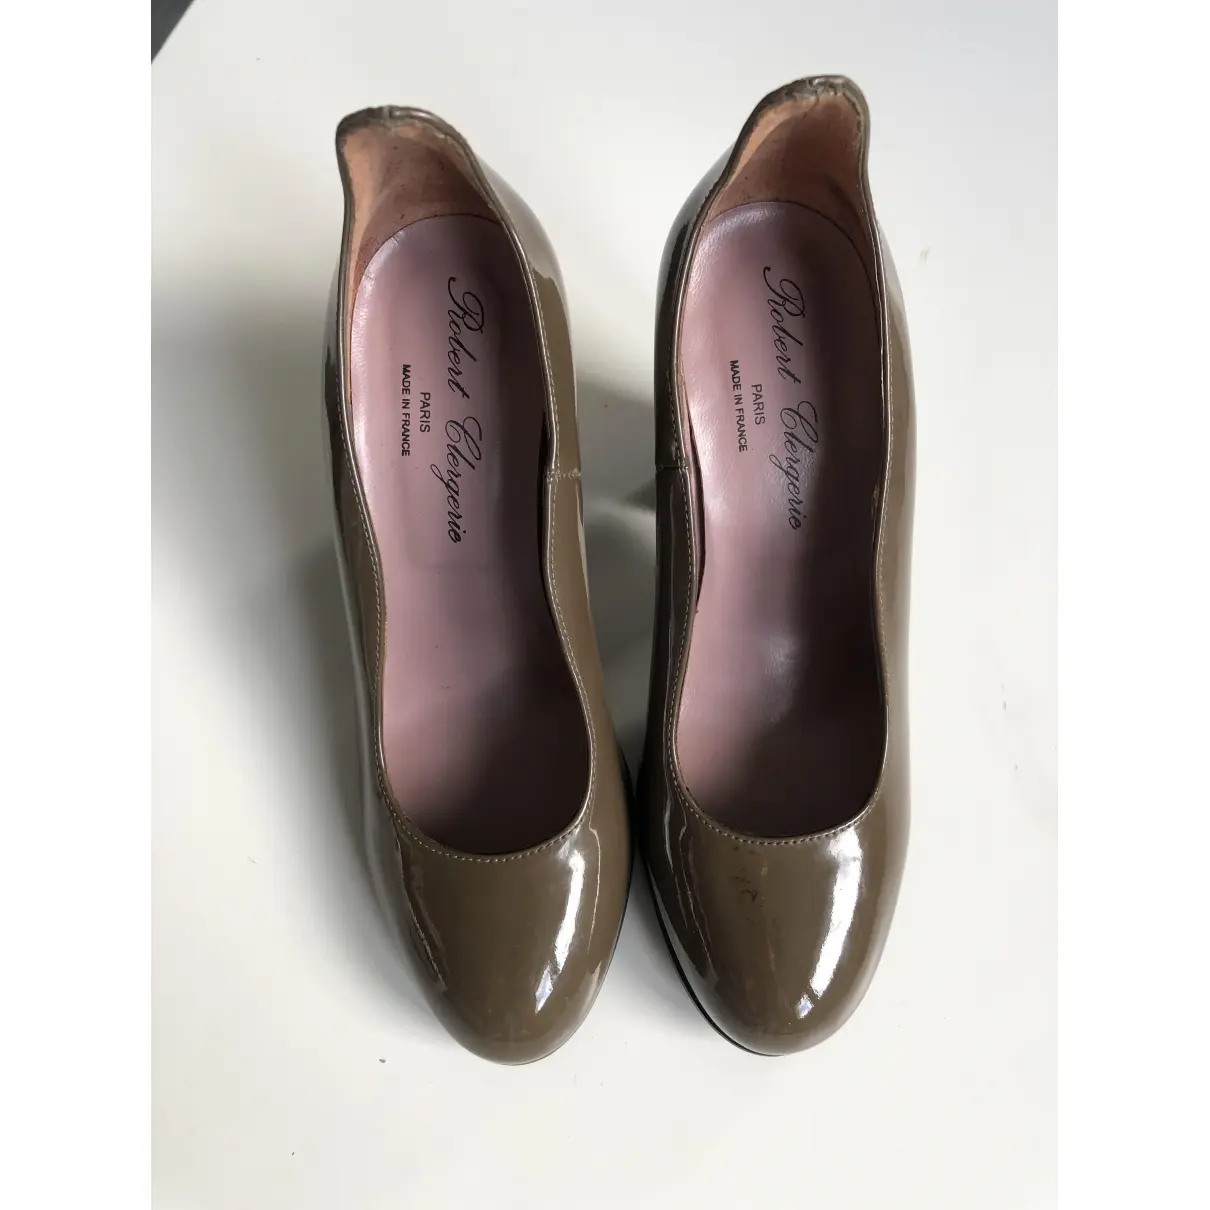 Buy Robert Clergerie Patent leather heels online